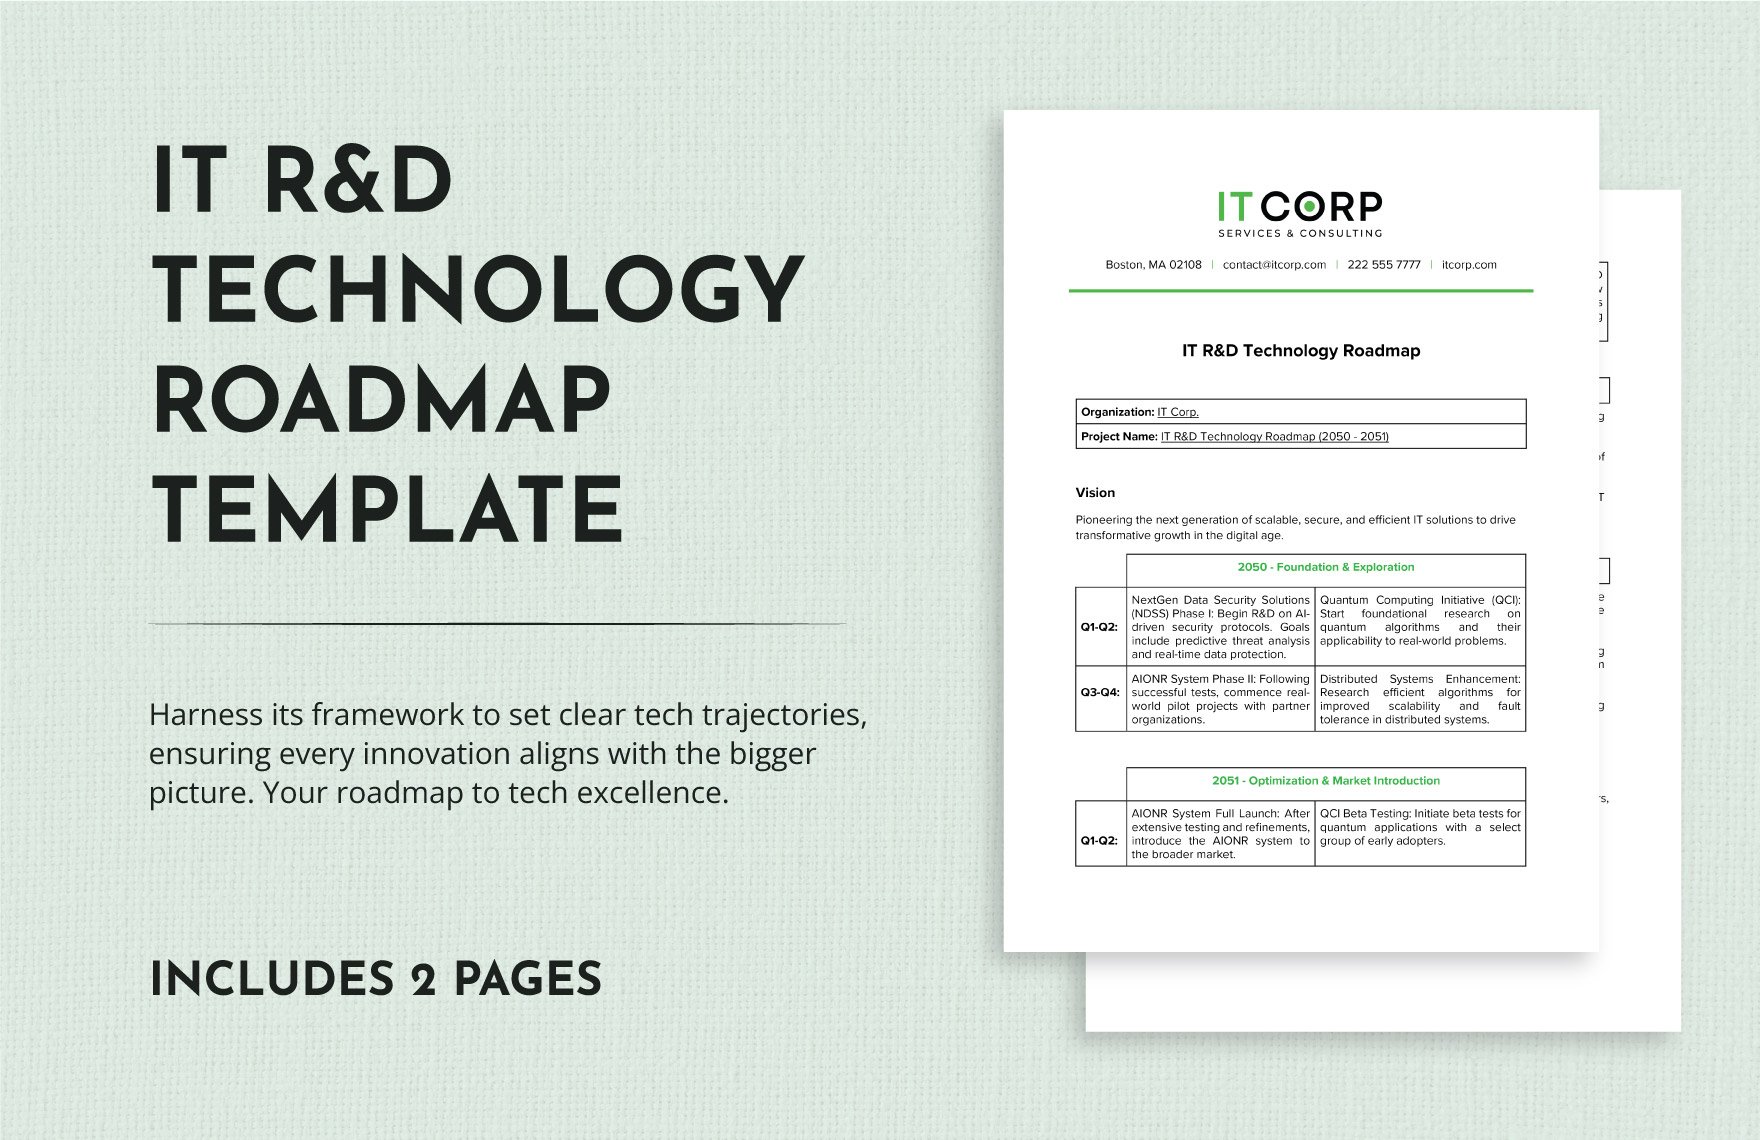 IT R&D Technology Roadmap Template